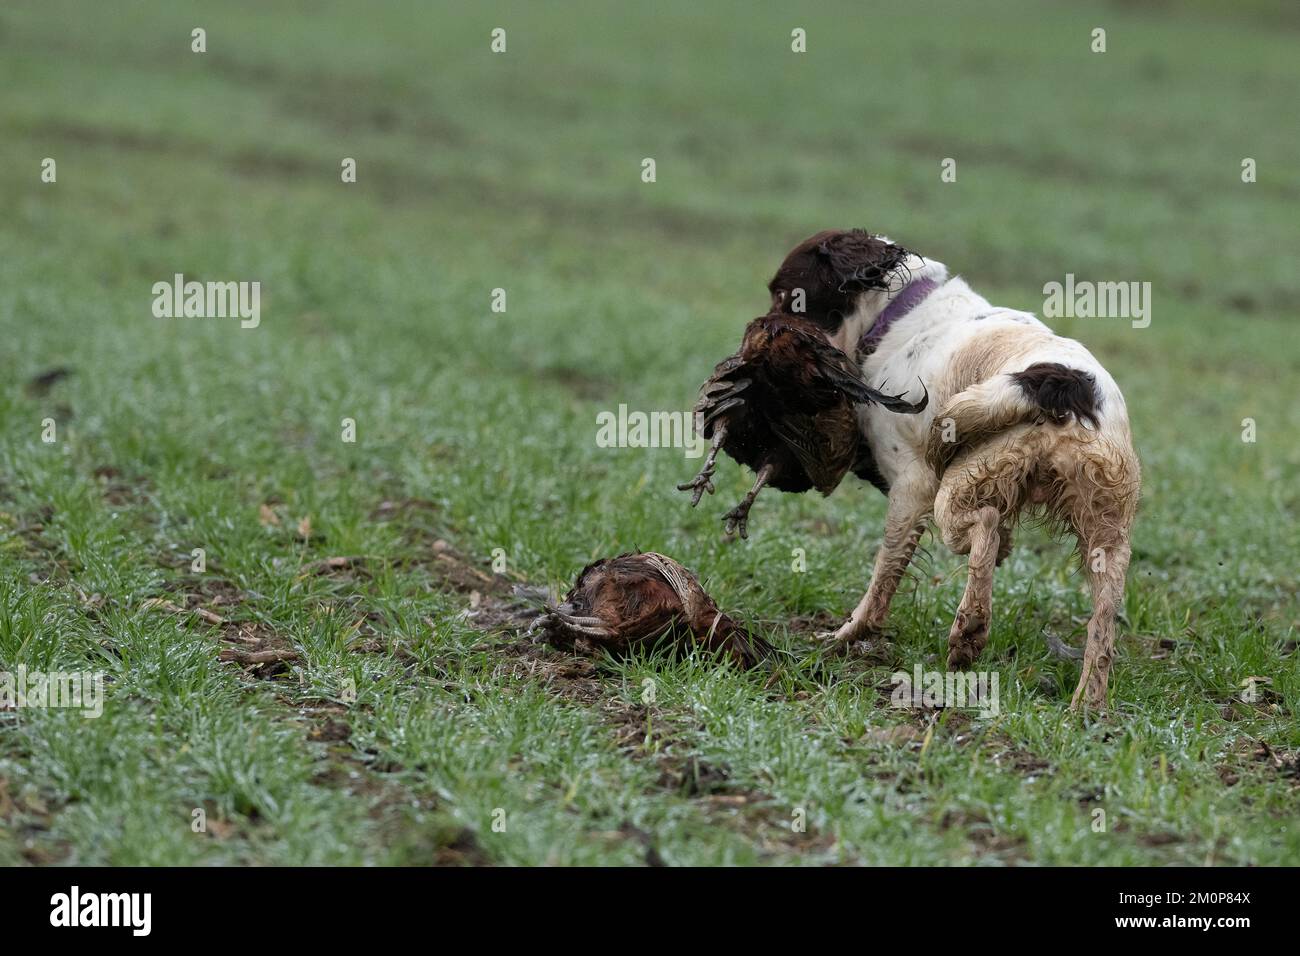 springer spaniel retrieving pheasant Stock Photo